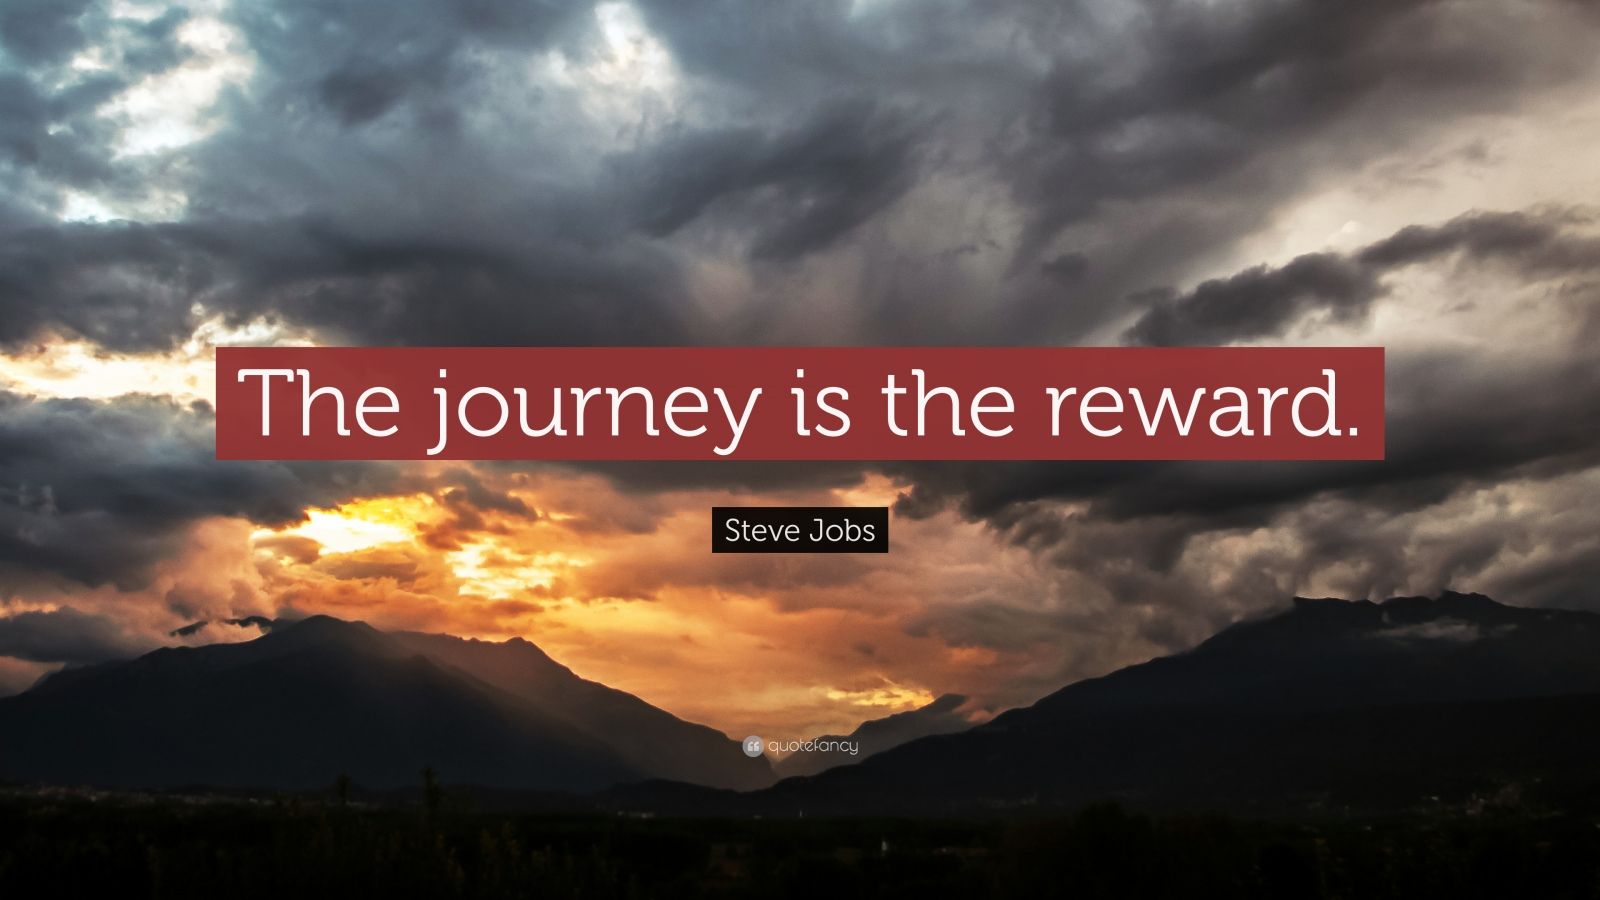 journey is the reward quote